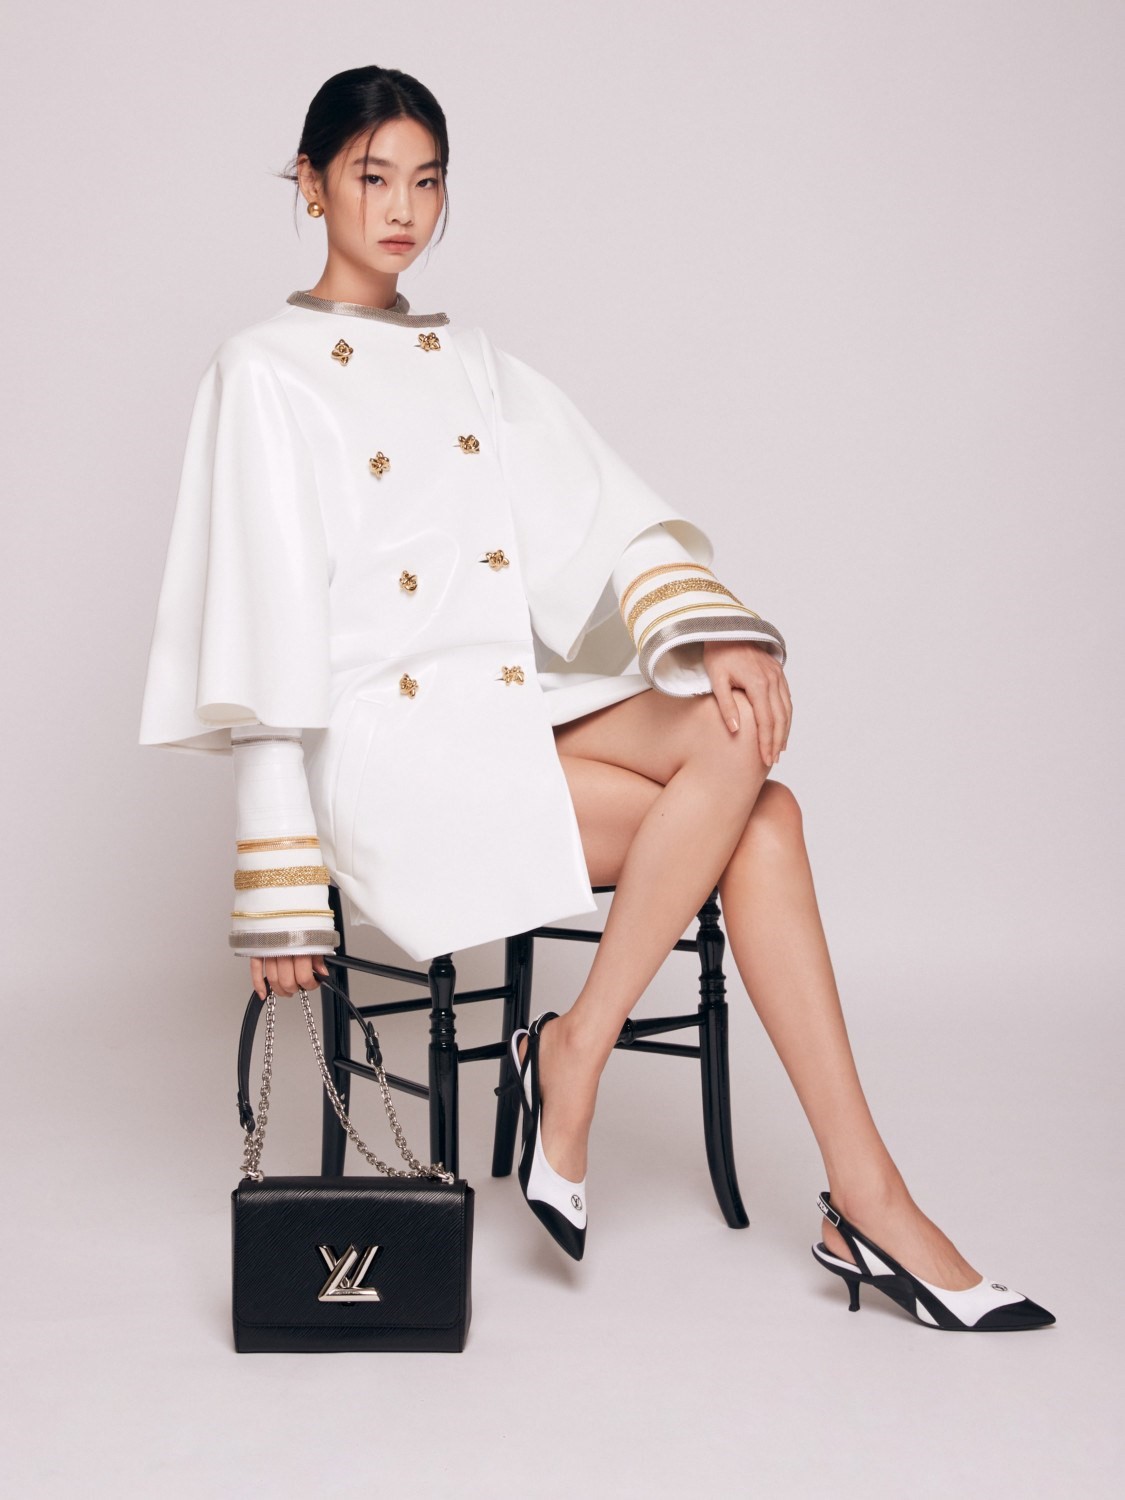 Squid Game actress HoYeon Jung wows at Paris Fashion Week and